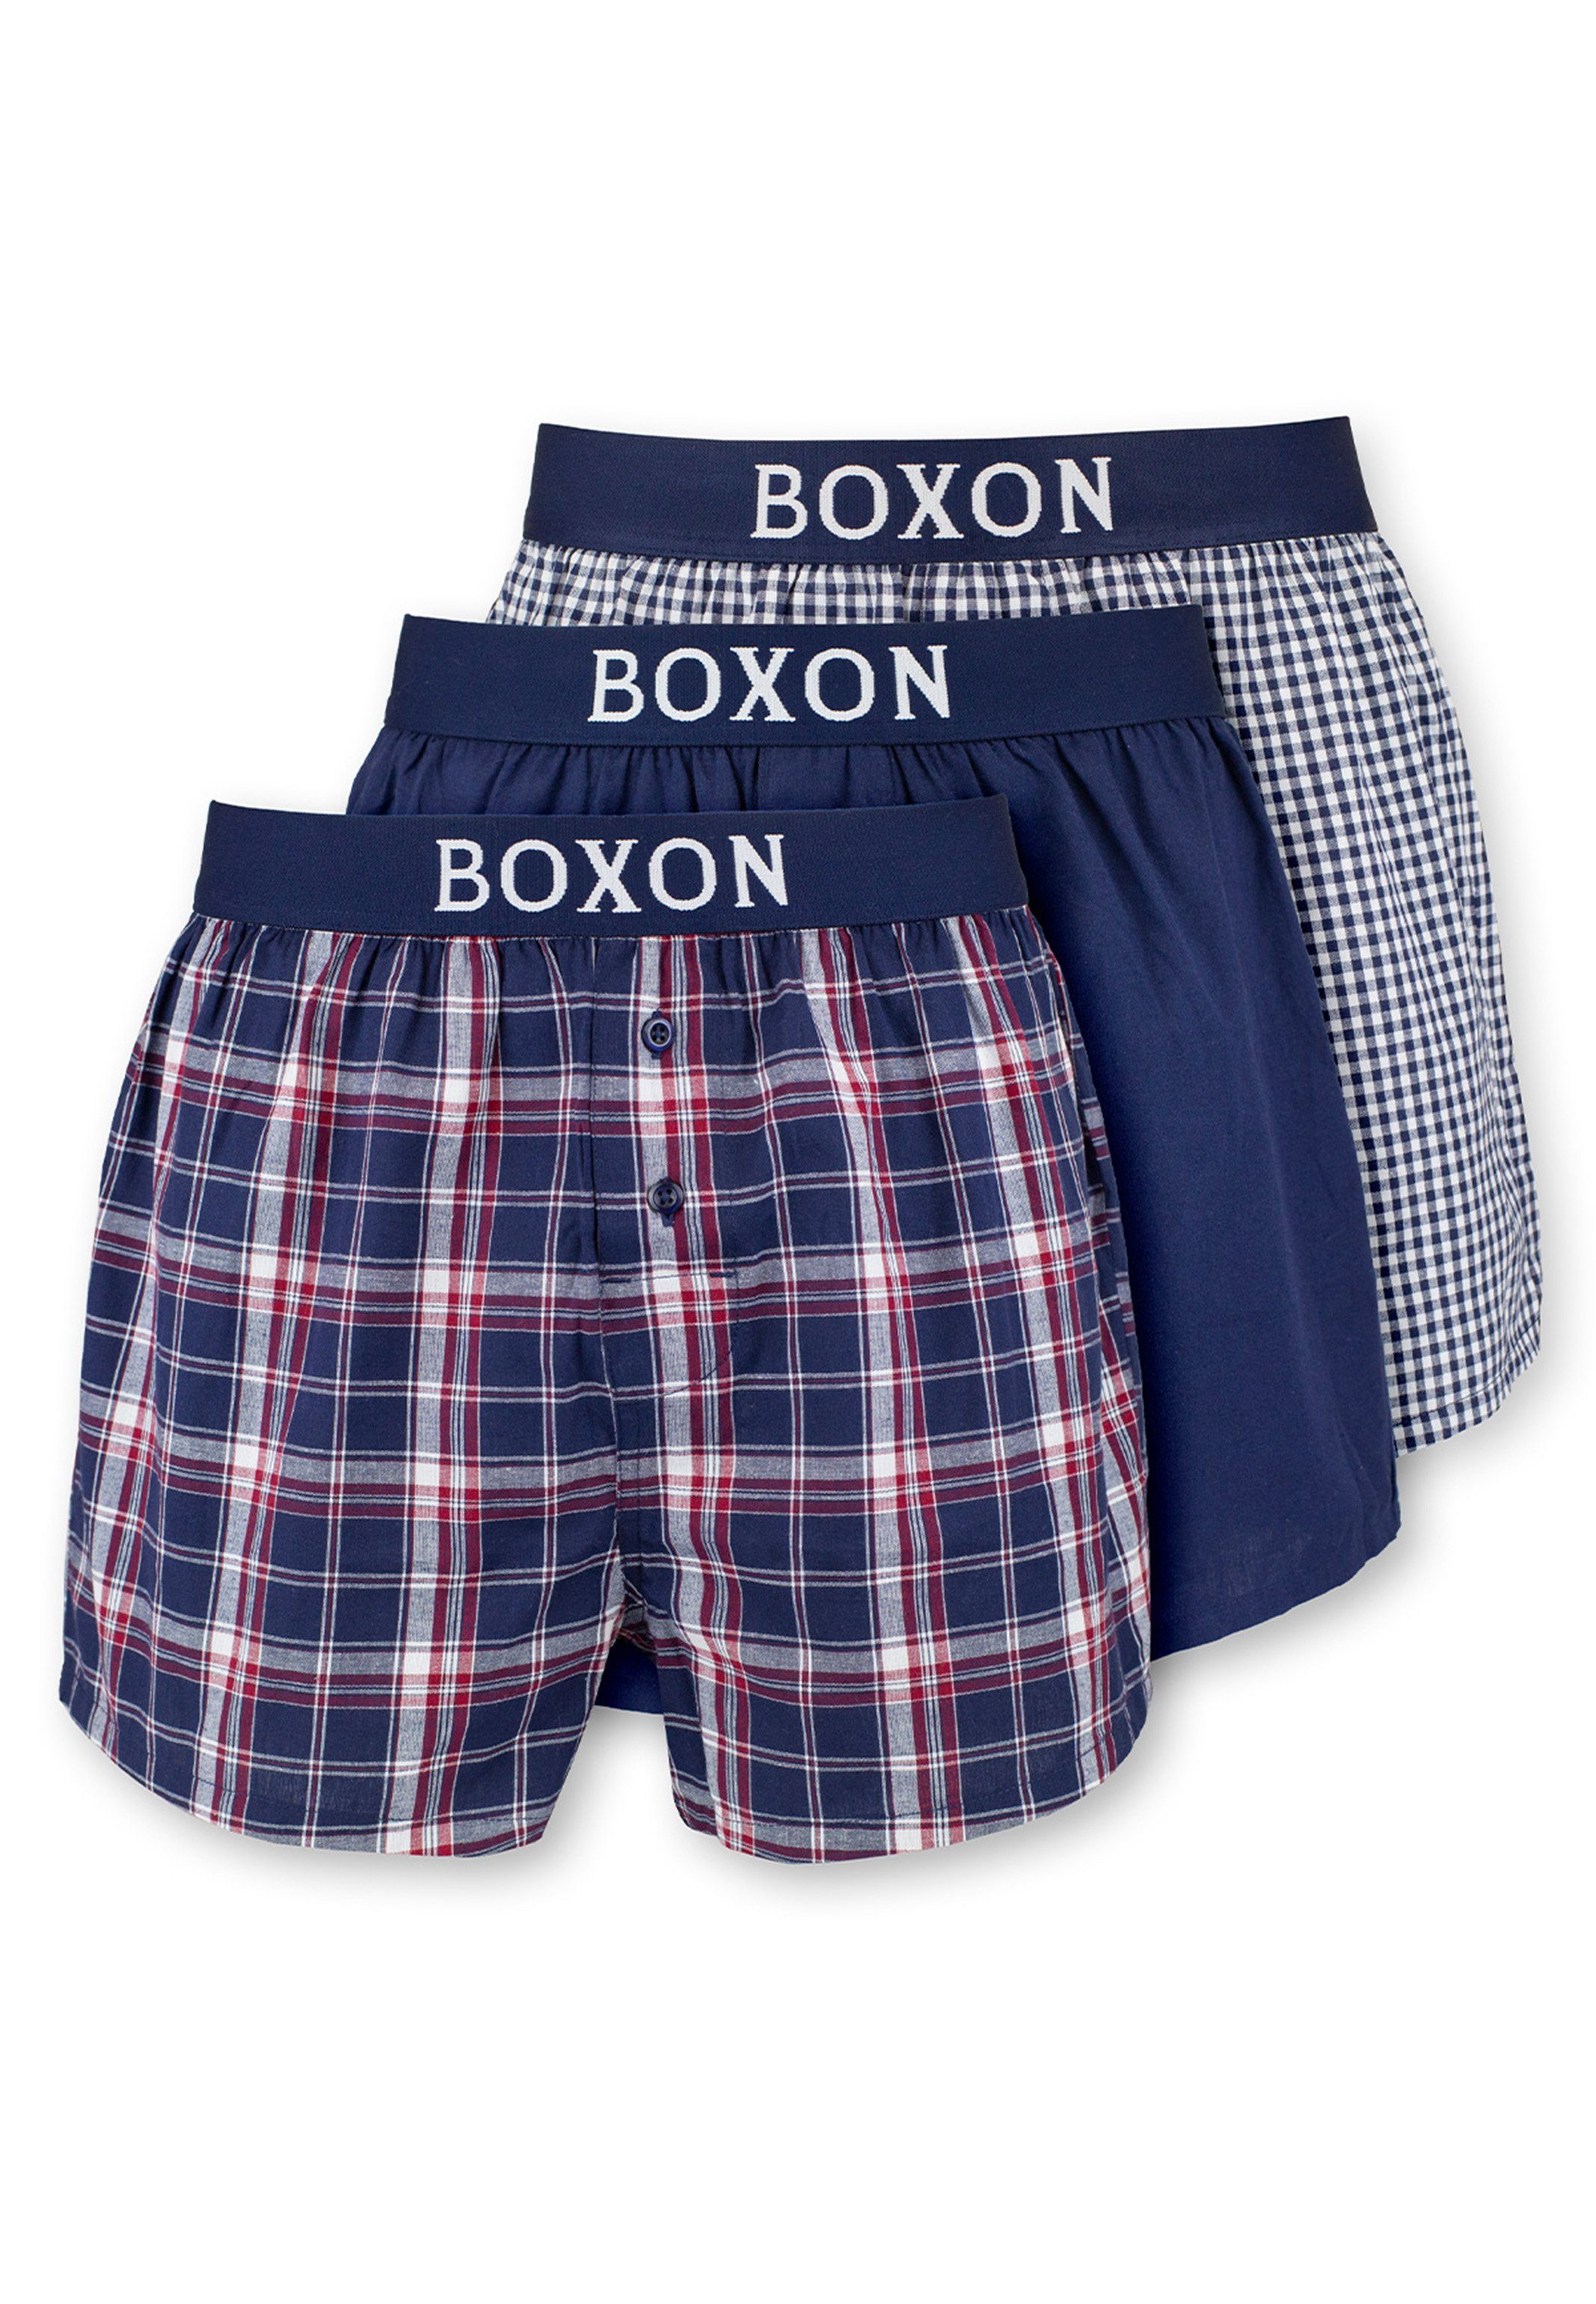 BOXON Boxershorts 3er Pack Web (Spar-Set, 3-St) Boxershorts - Baumwolle - Mit Eingriff - Softer Gummibund Blau